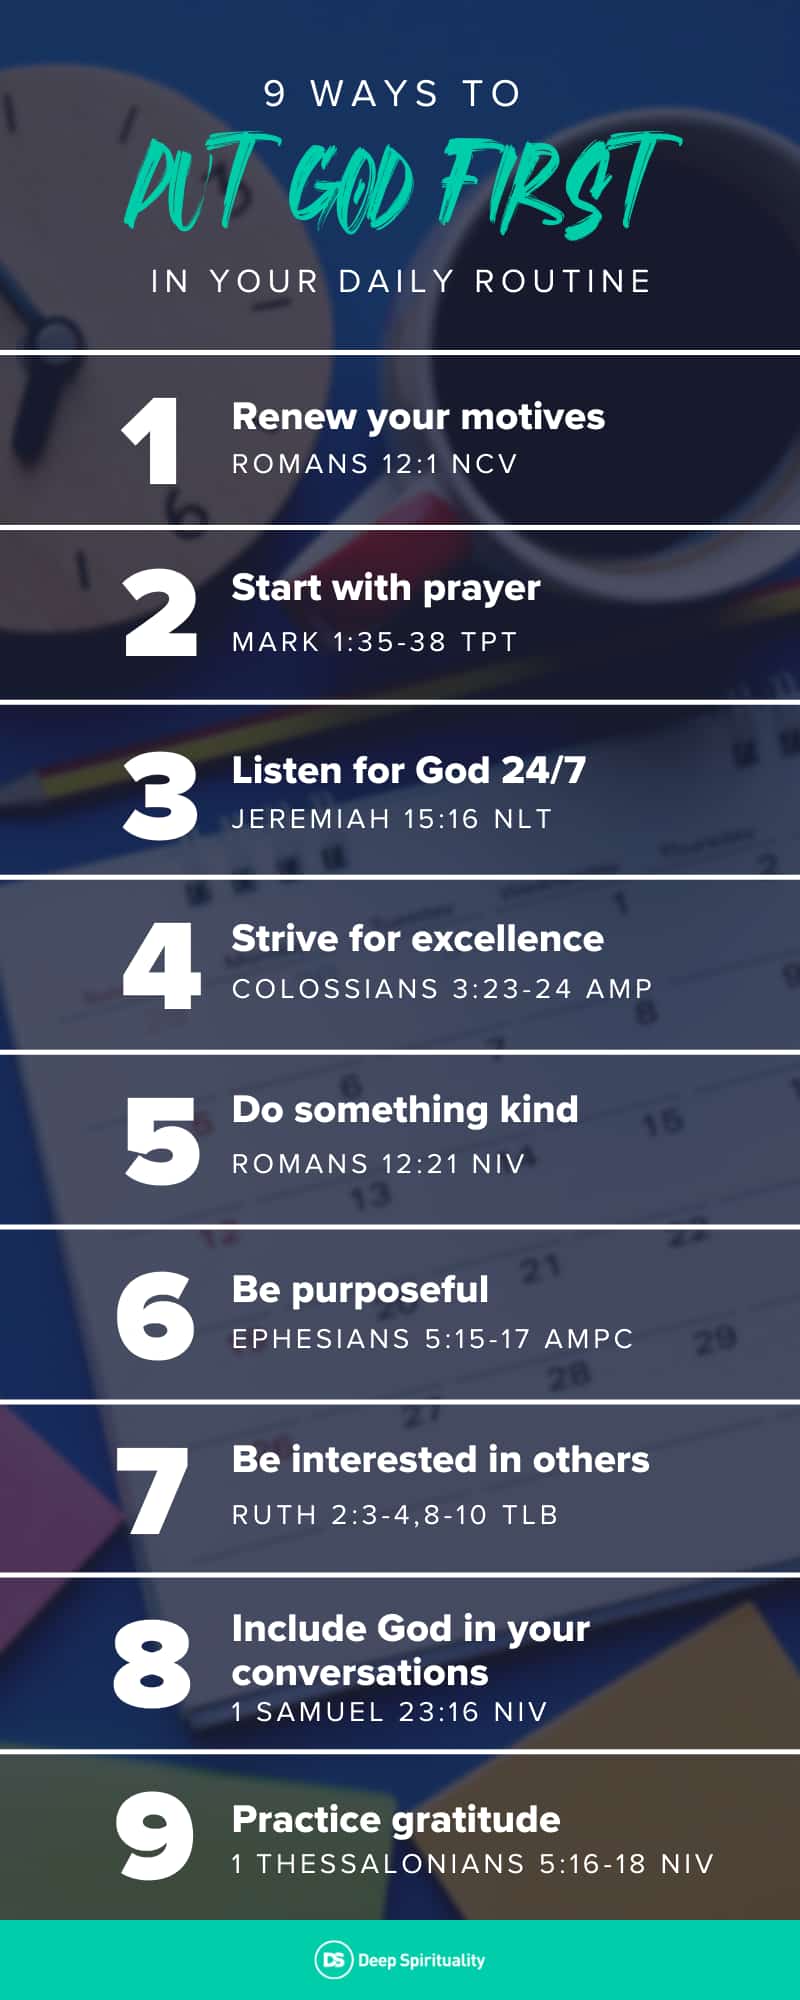 9 ways to put God first